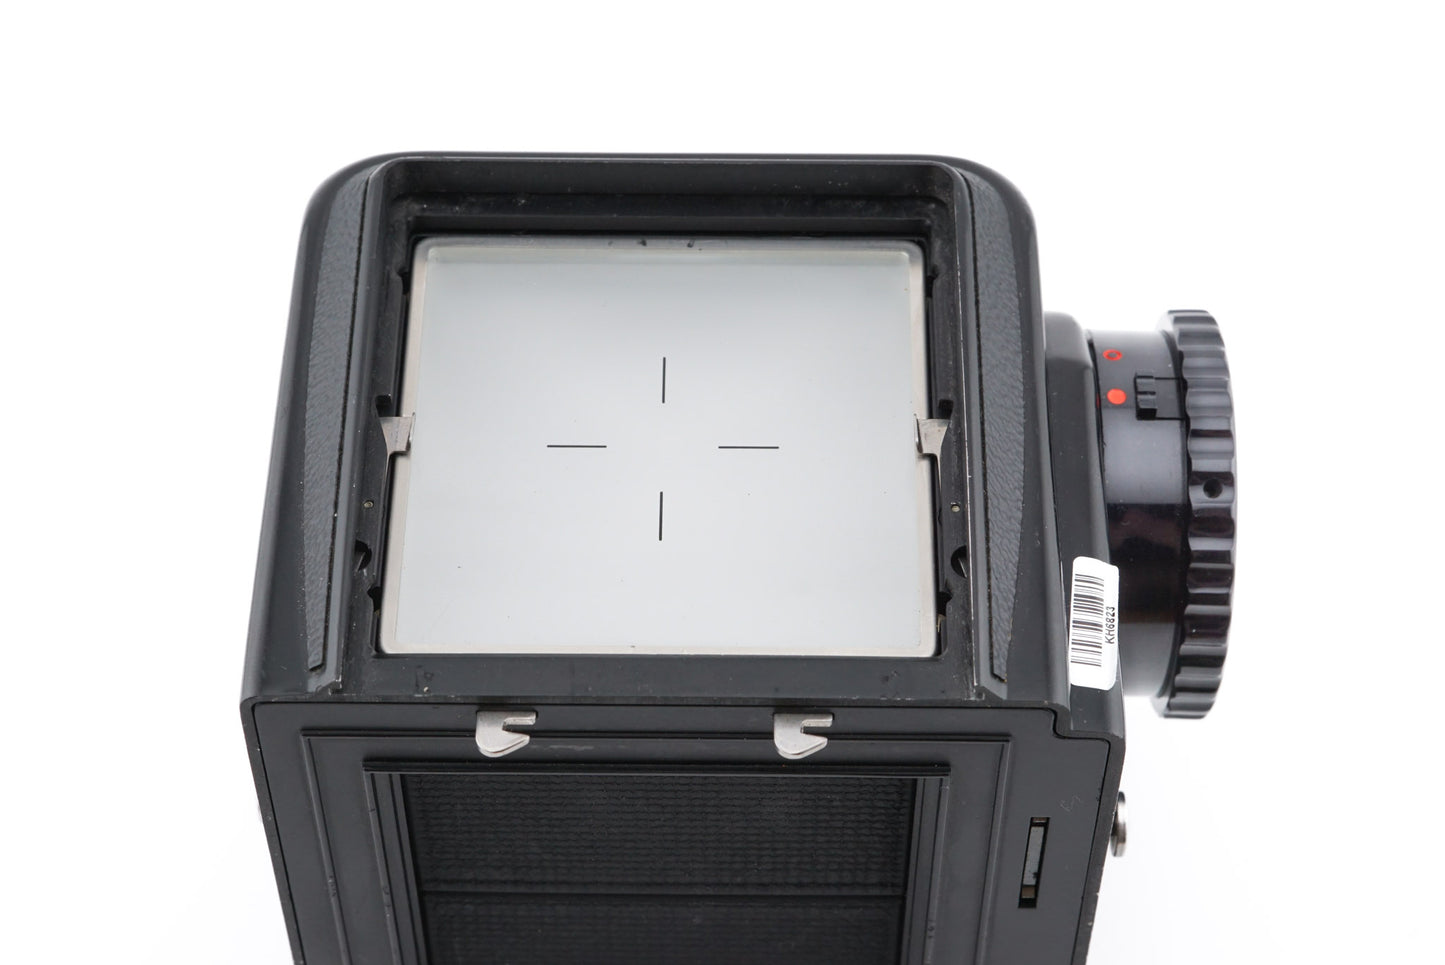 Hasselblad 500C/M + A12 Film Magazine (30147 Black) + 80mm f2.8 Planar T* CF + Waist Level Finder (Old / 42277 Black)